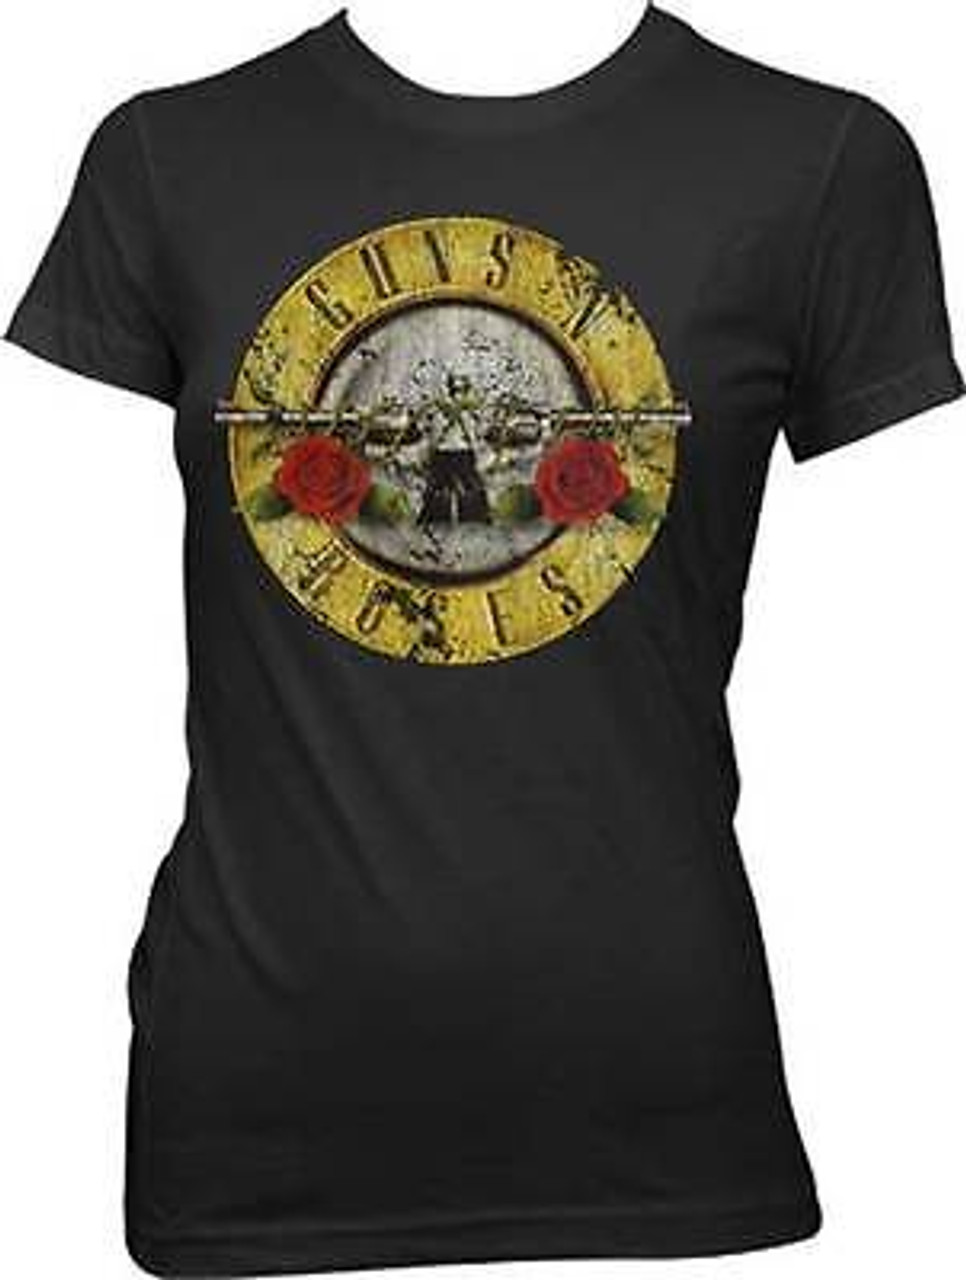 Guns N Roses Distressed Bullet Girls Art Junior Jr Band Rock Music T Shirt S Xl Fearless Apparel